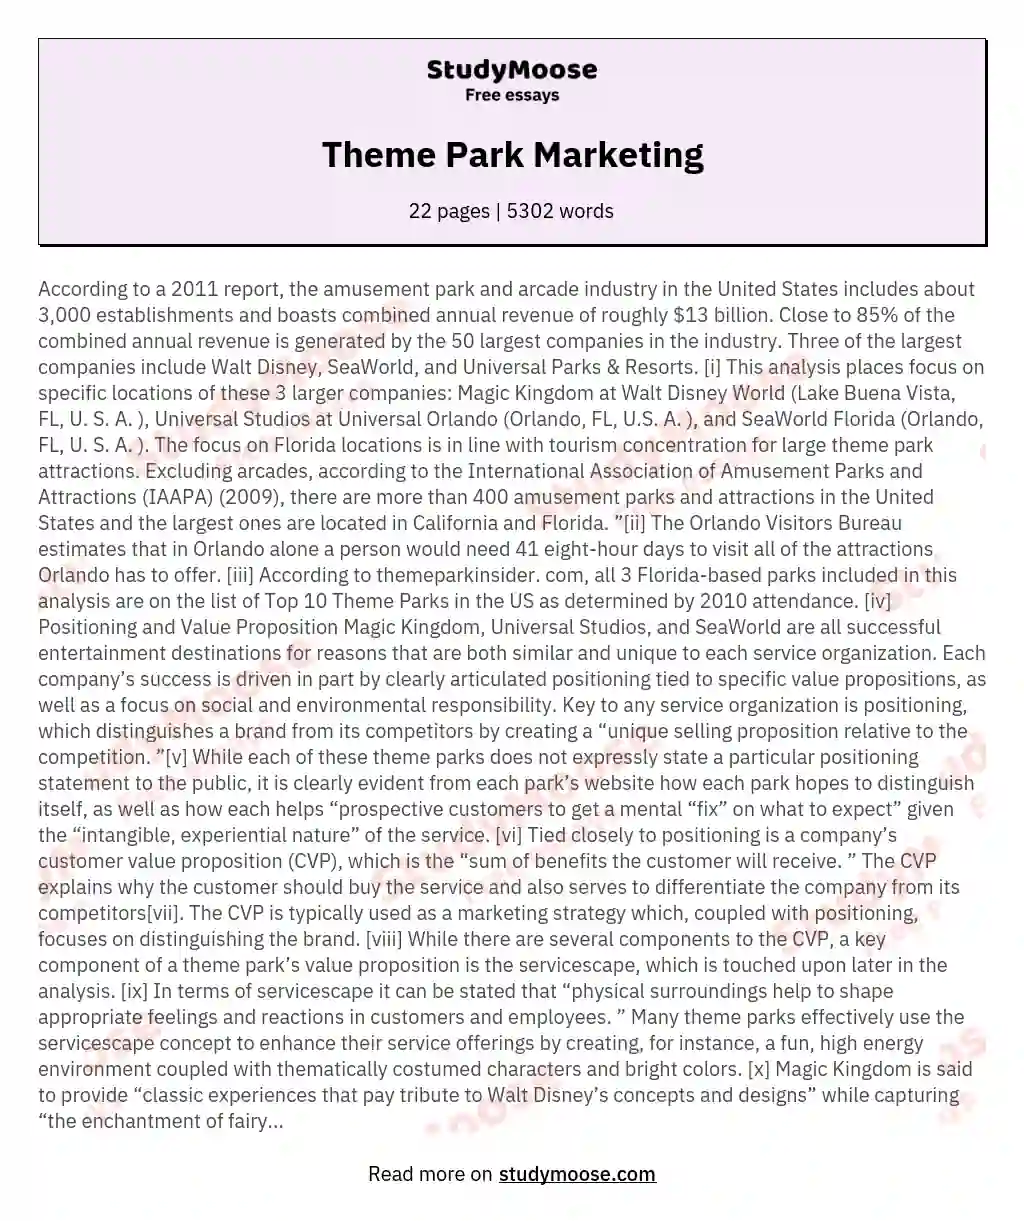 Theme Park Marketing essay